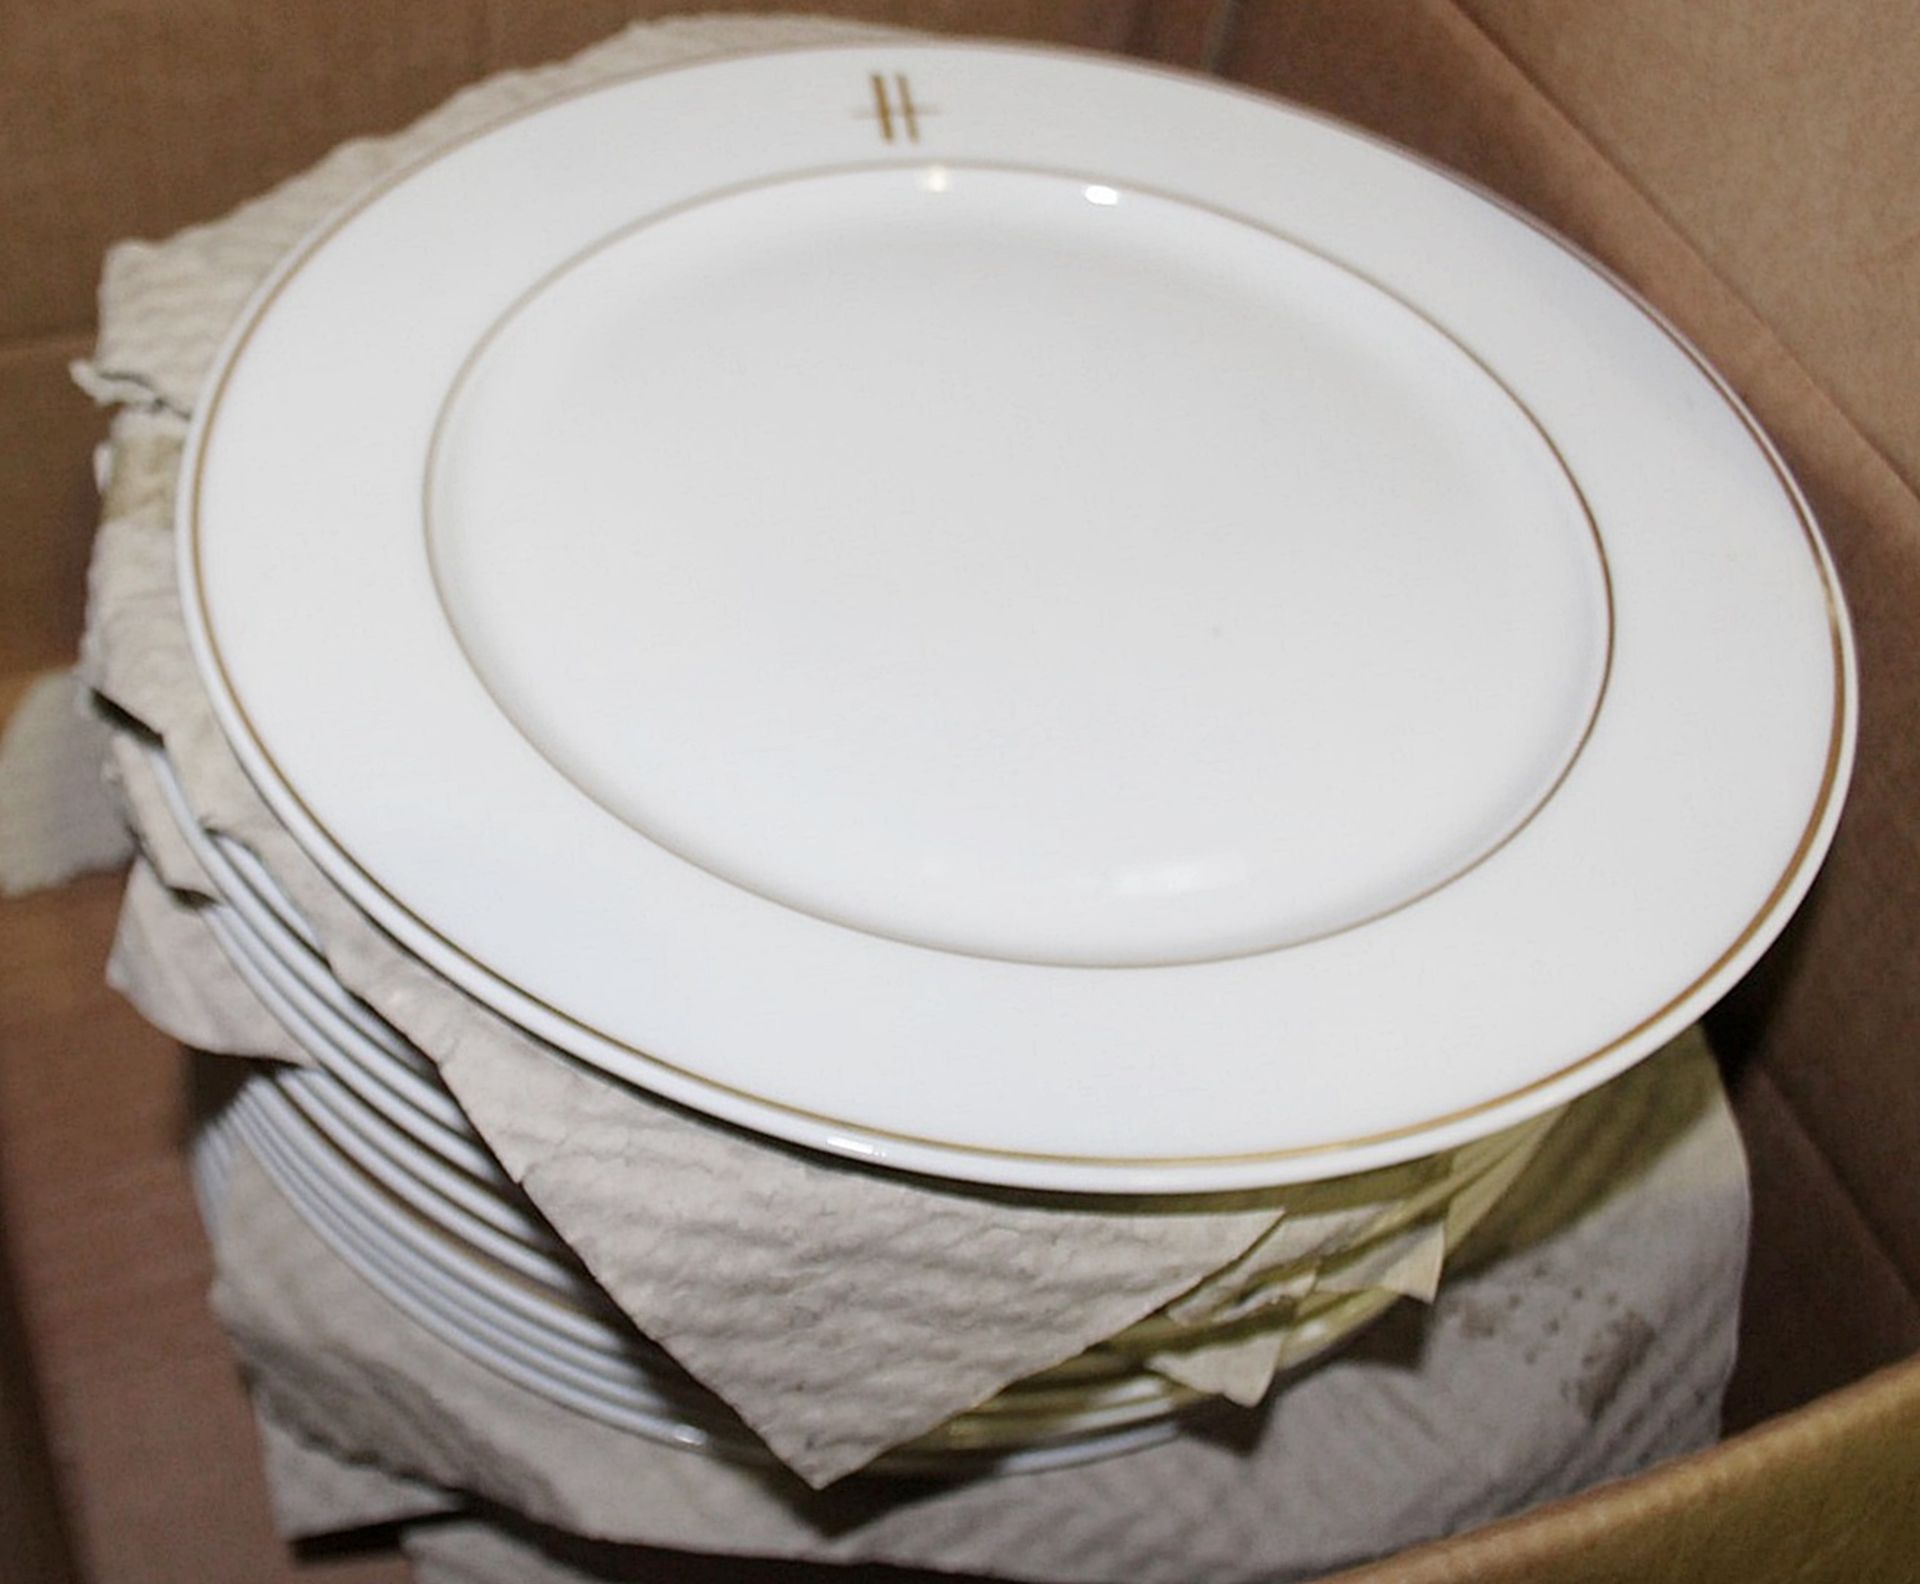 20 x PILLIVUYT Porcelain Small Dinner / Dessert Plates In White Featuring 'Famous Branding' - Image 3 of 4